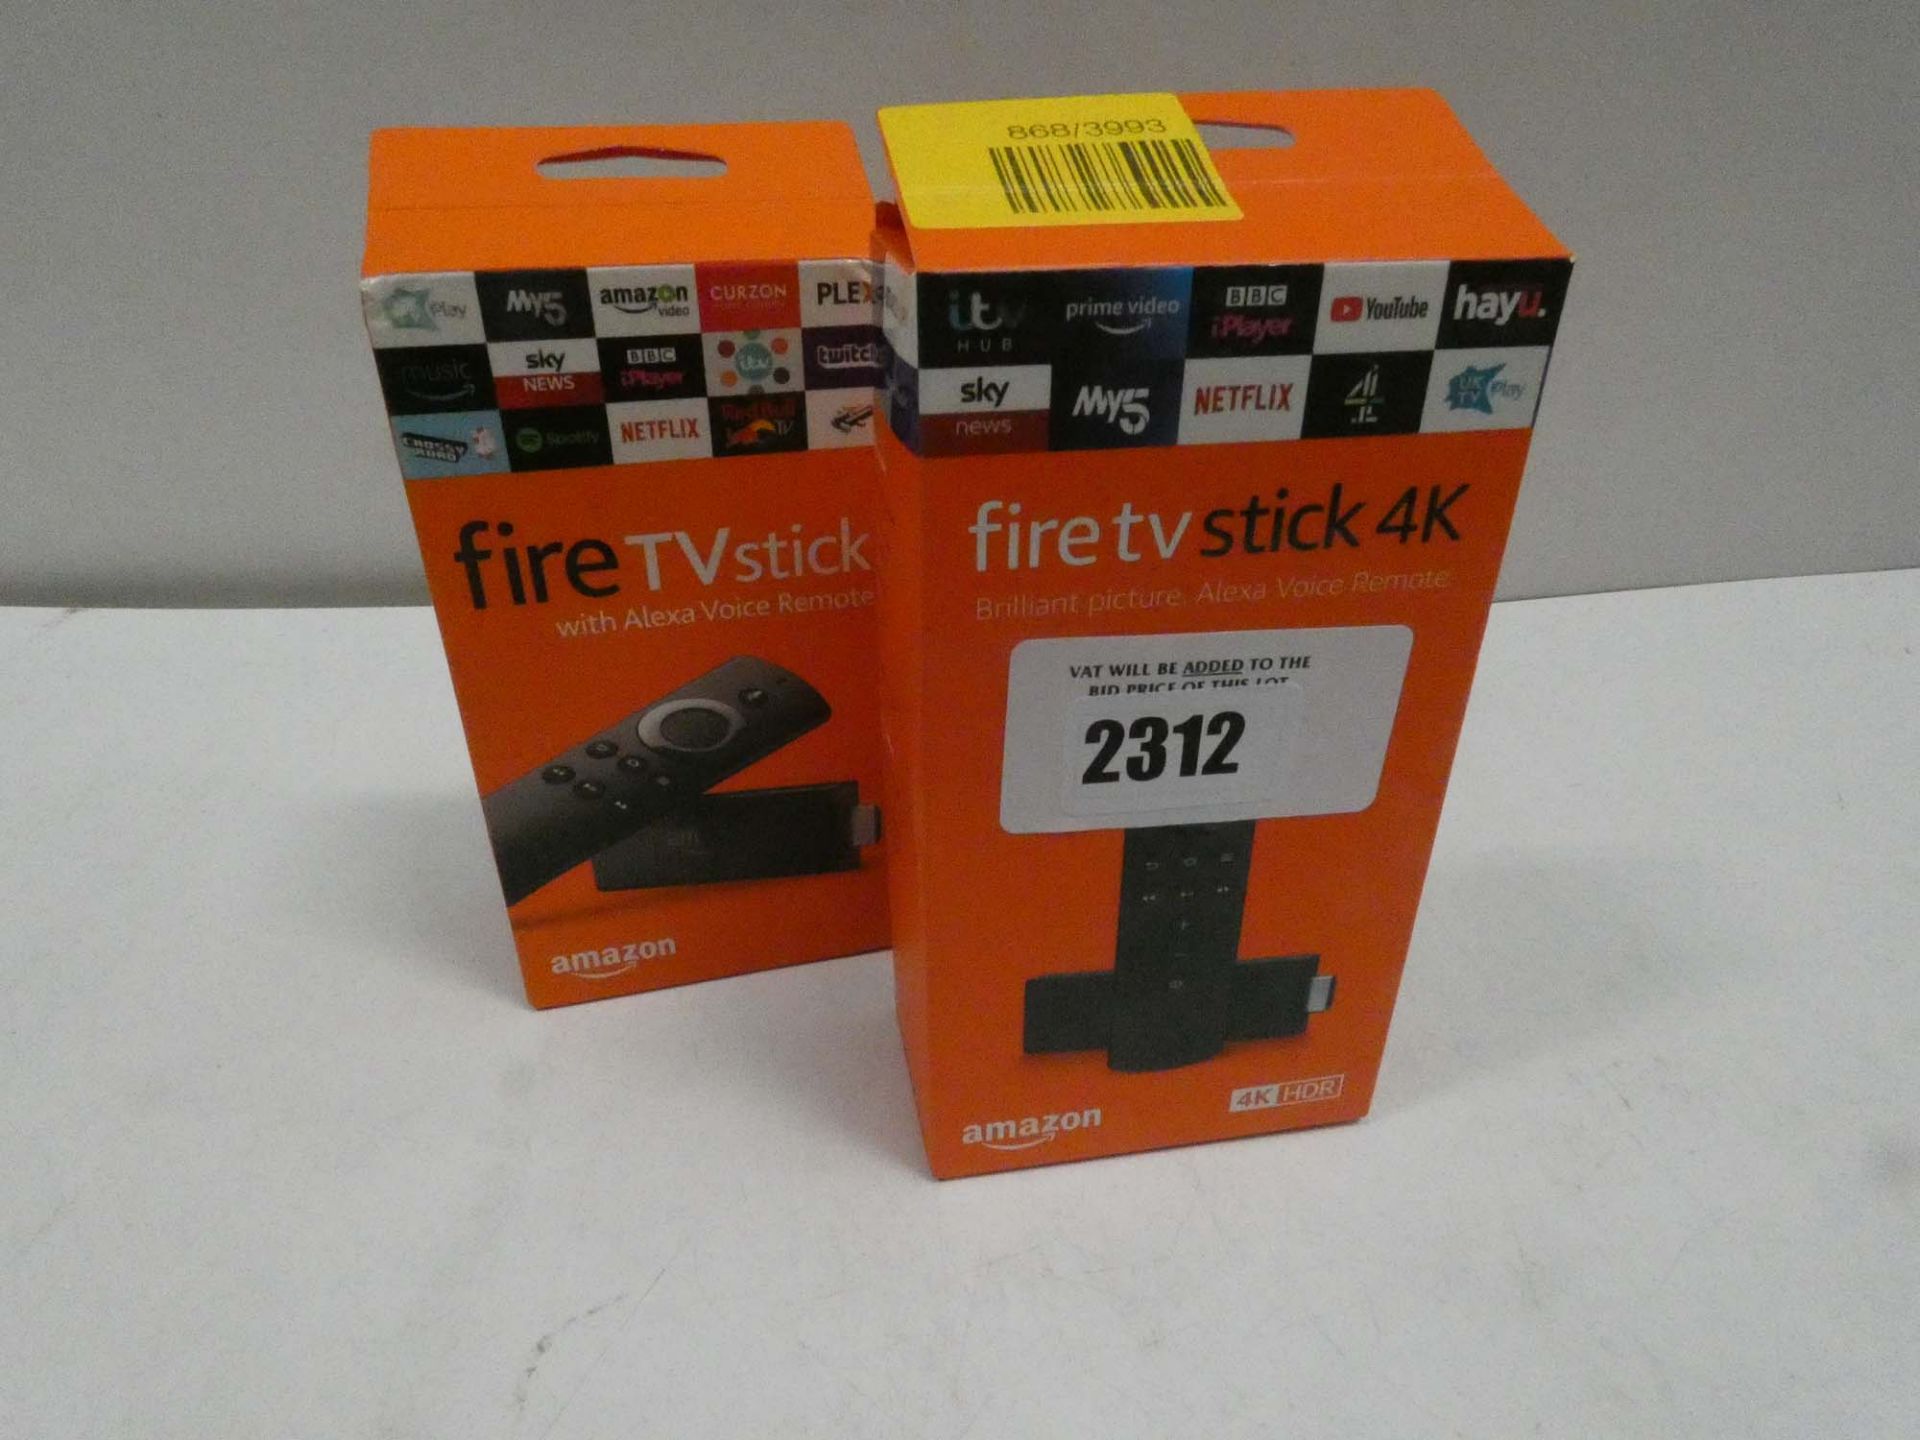 Amazon Fire TV Stick 4K's and Fire TV Stick